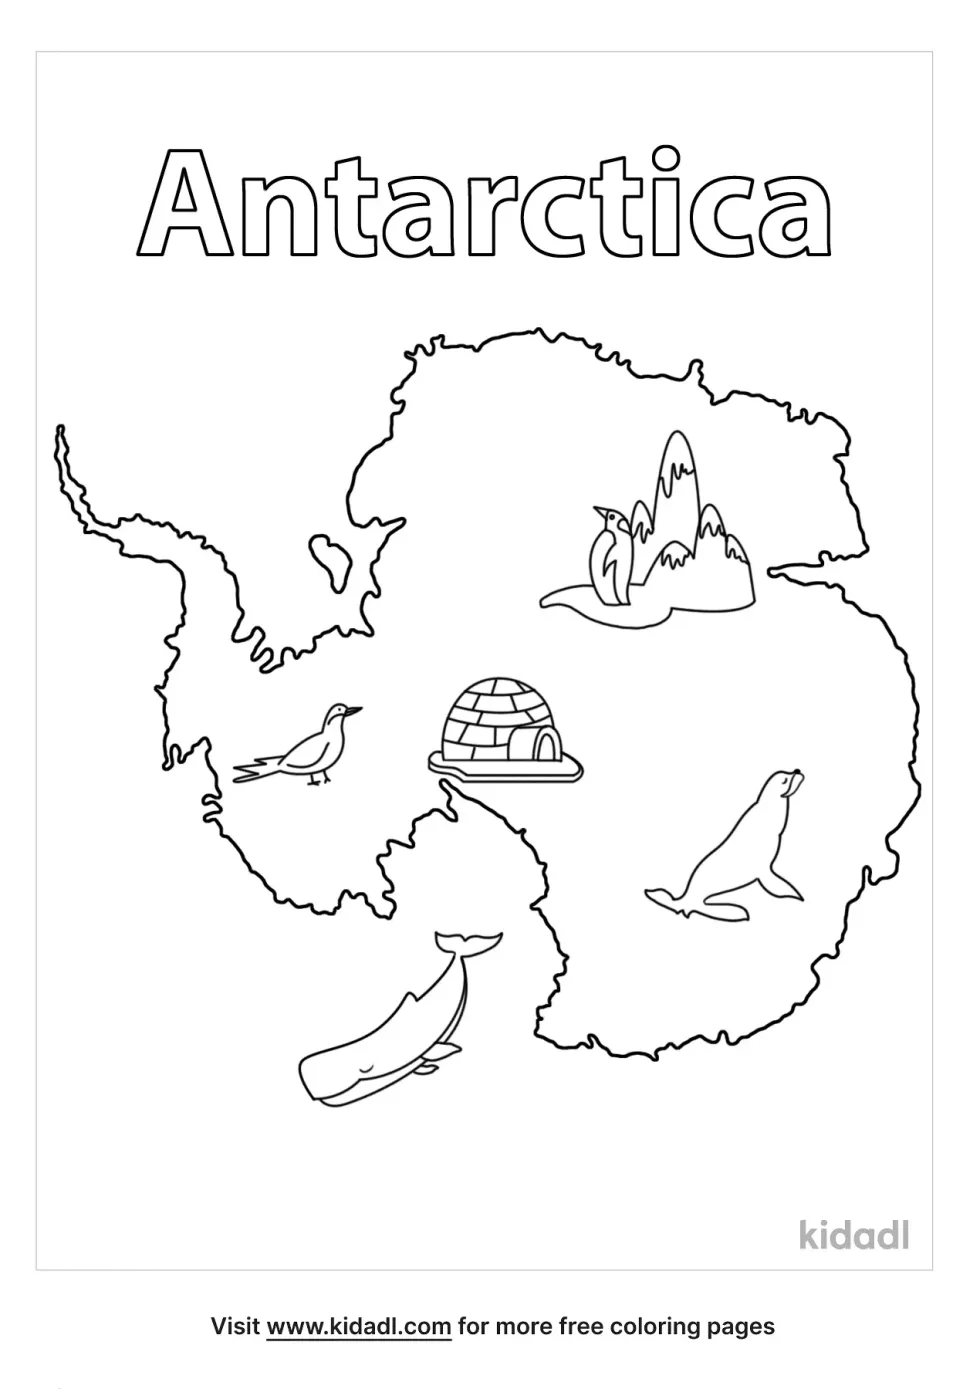 Antarctica Map Coloring Page